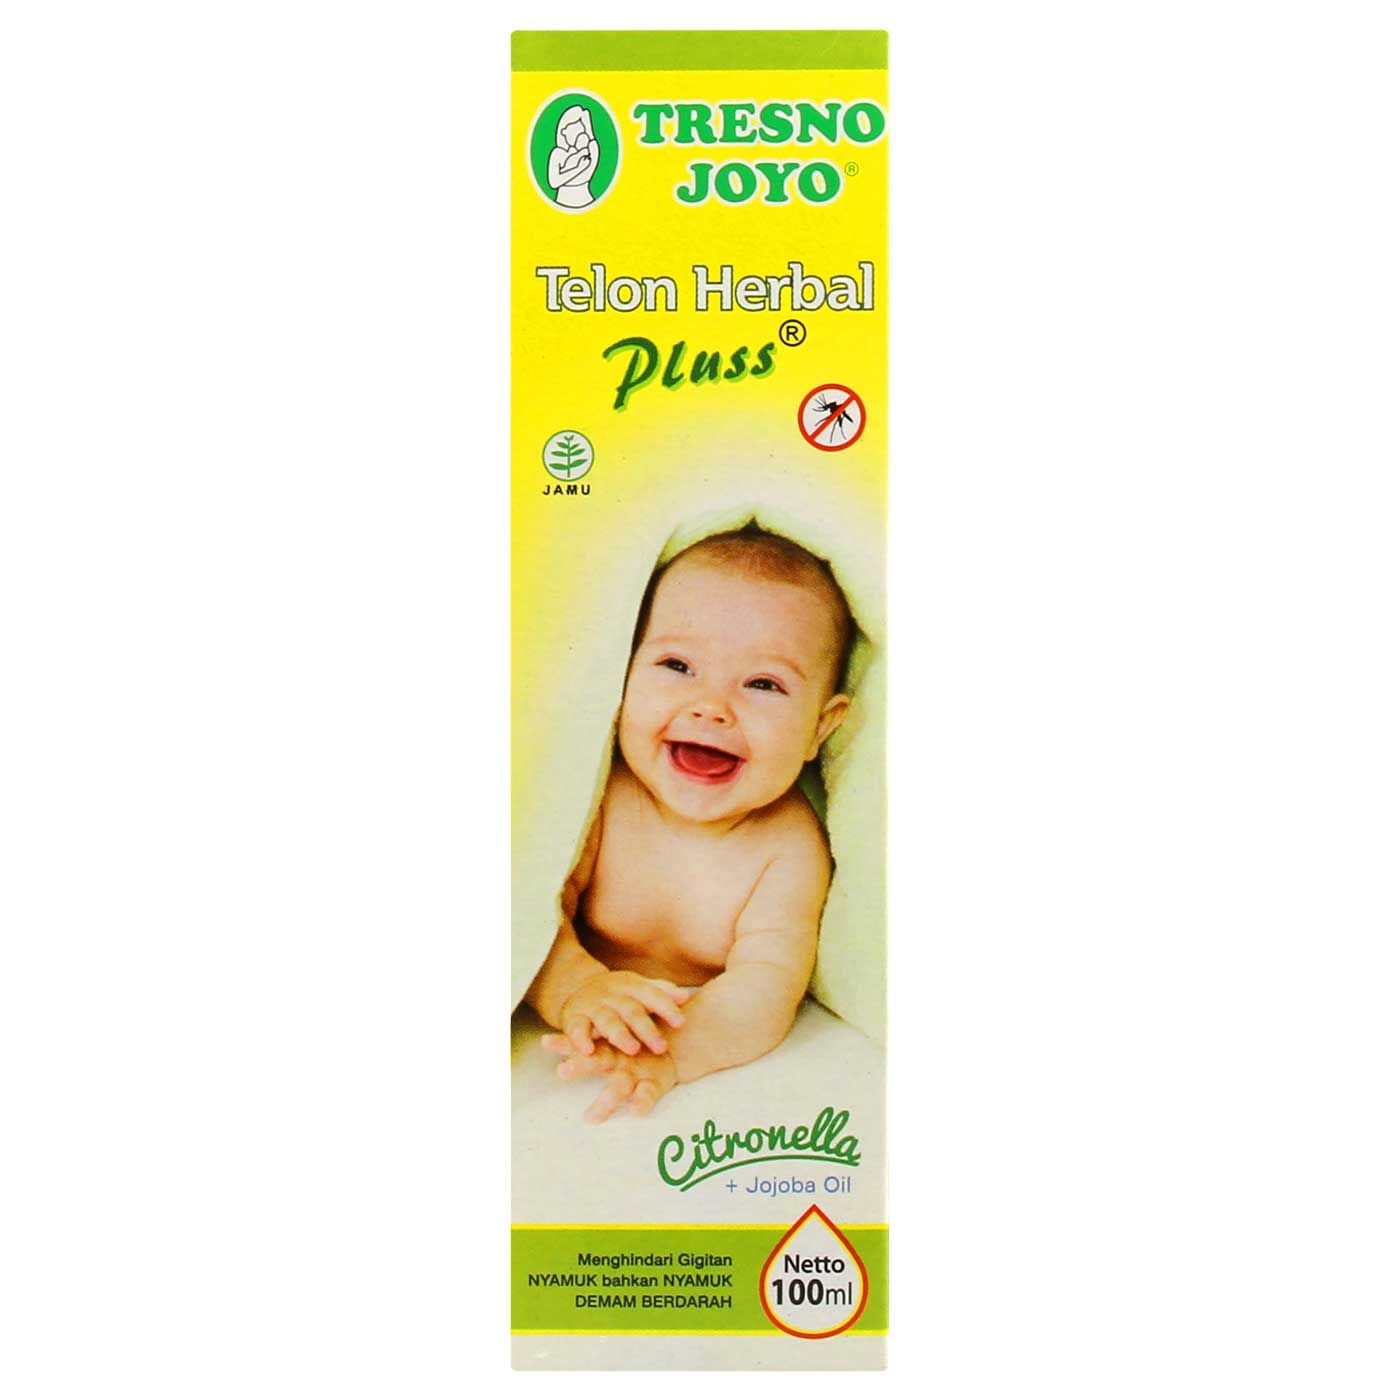 Tresno Joyo Minyak Telon Herbal Plus Citronella 100ml - 2